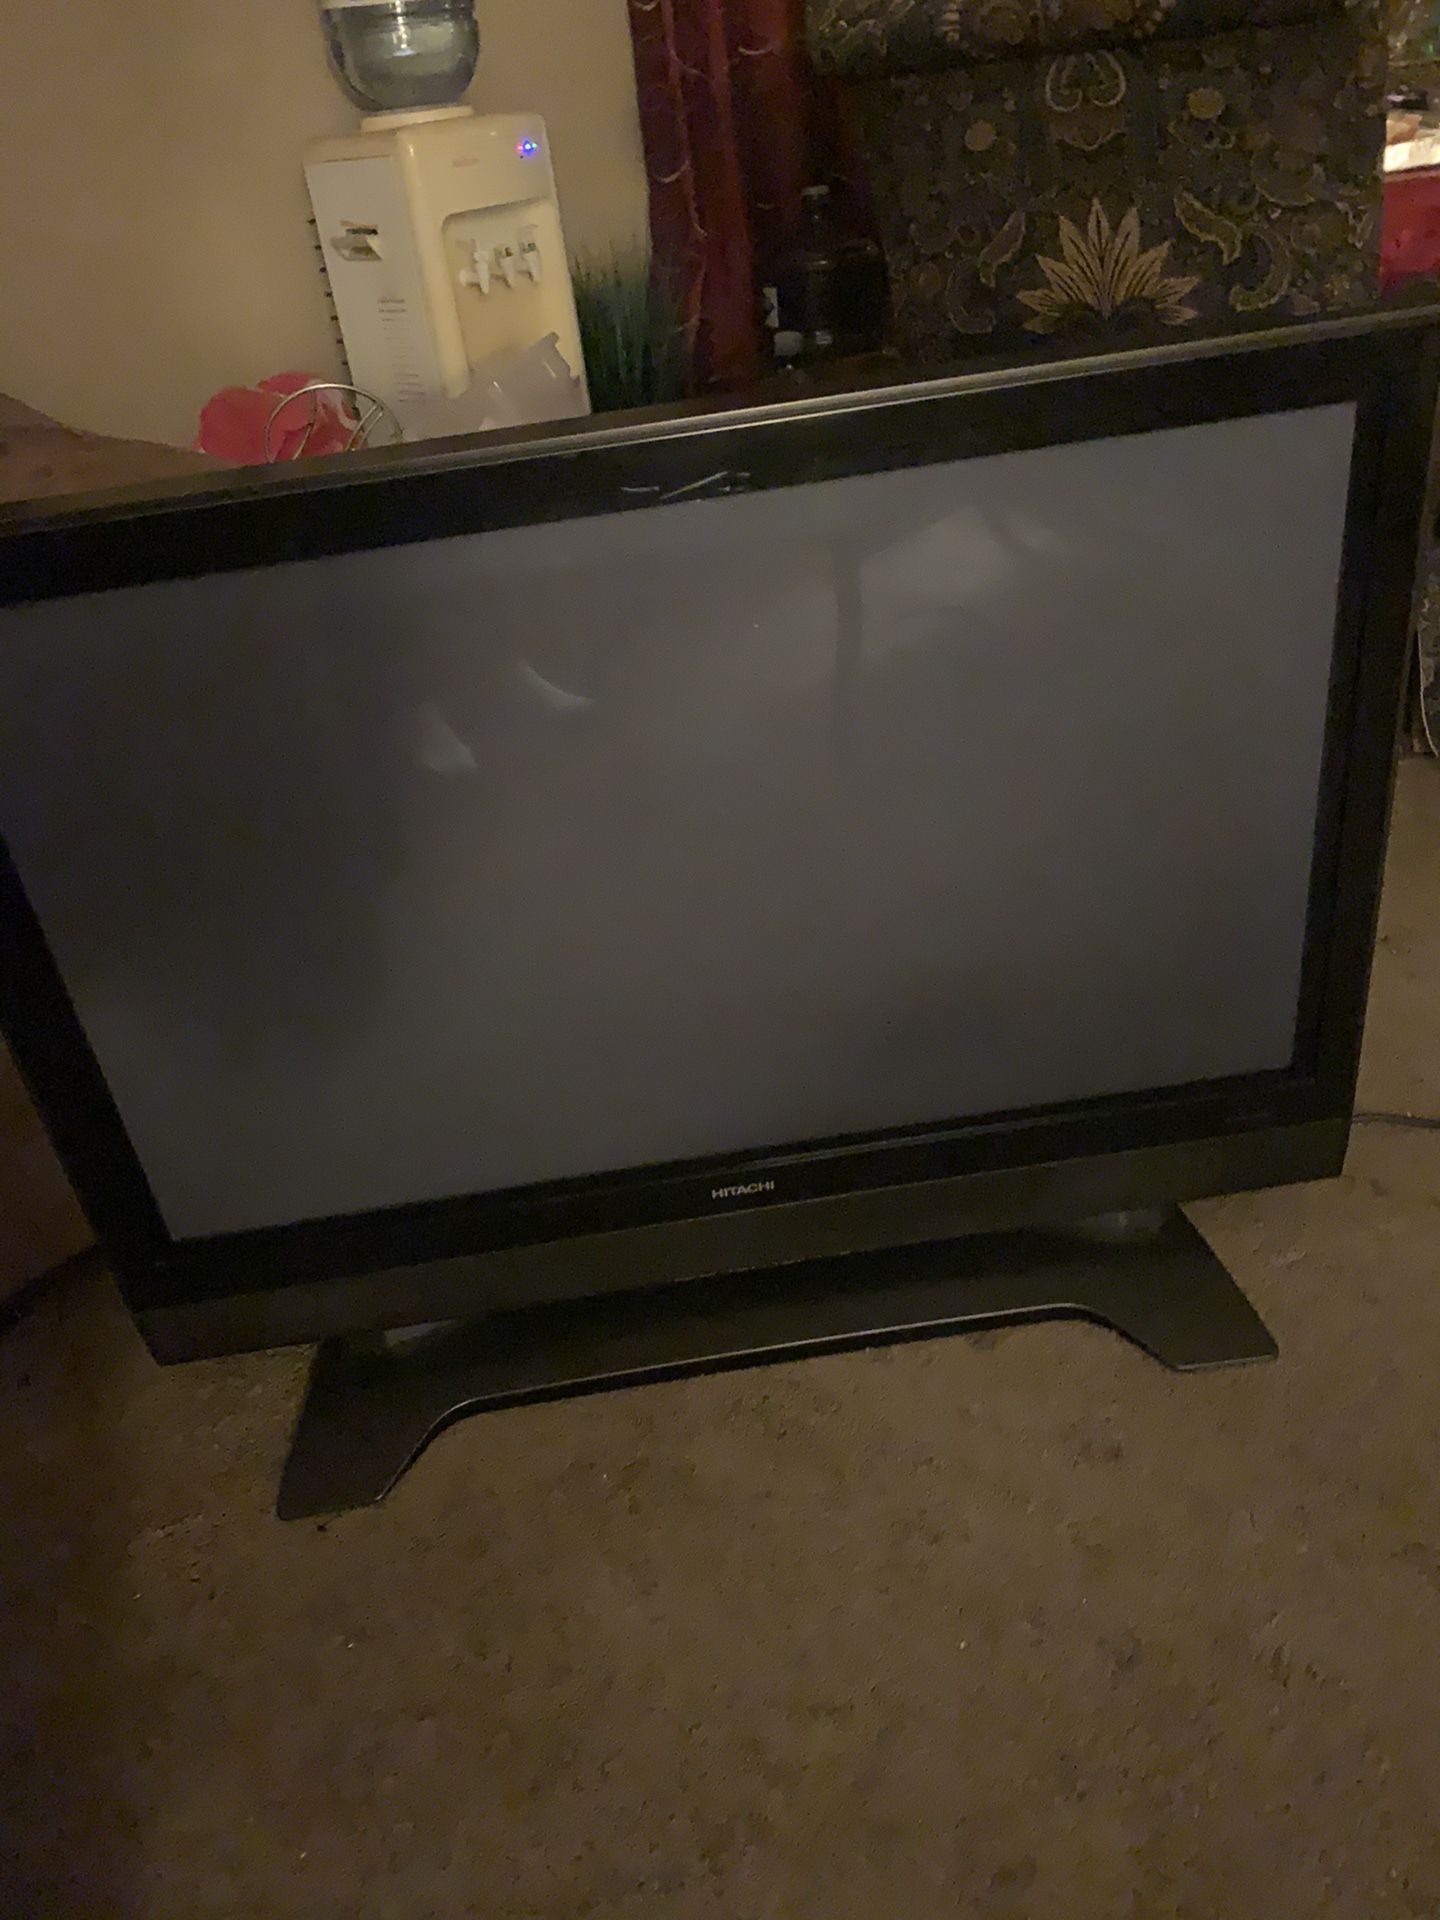 Hitachi Flat Screen Tv, 50” PENDING pick up